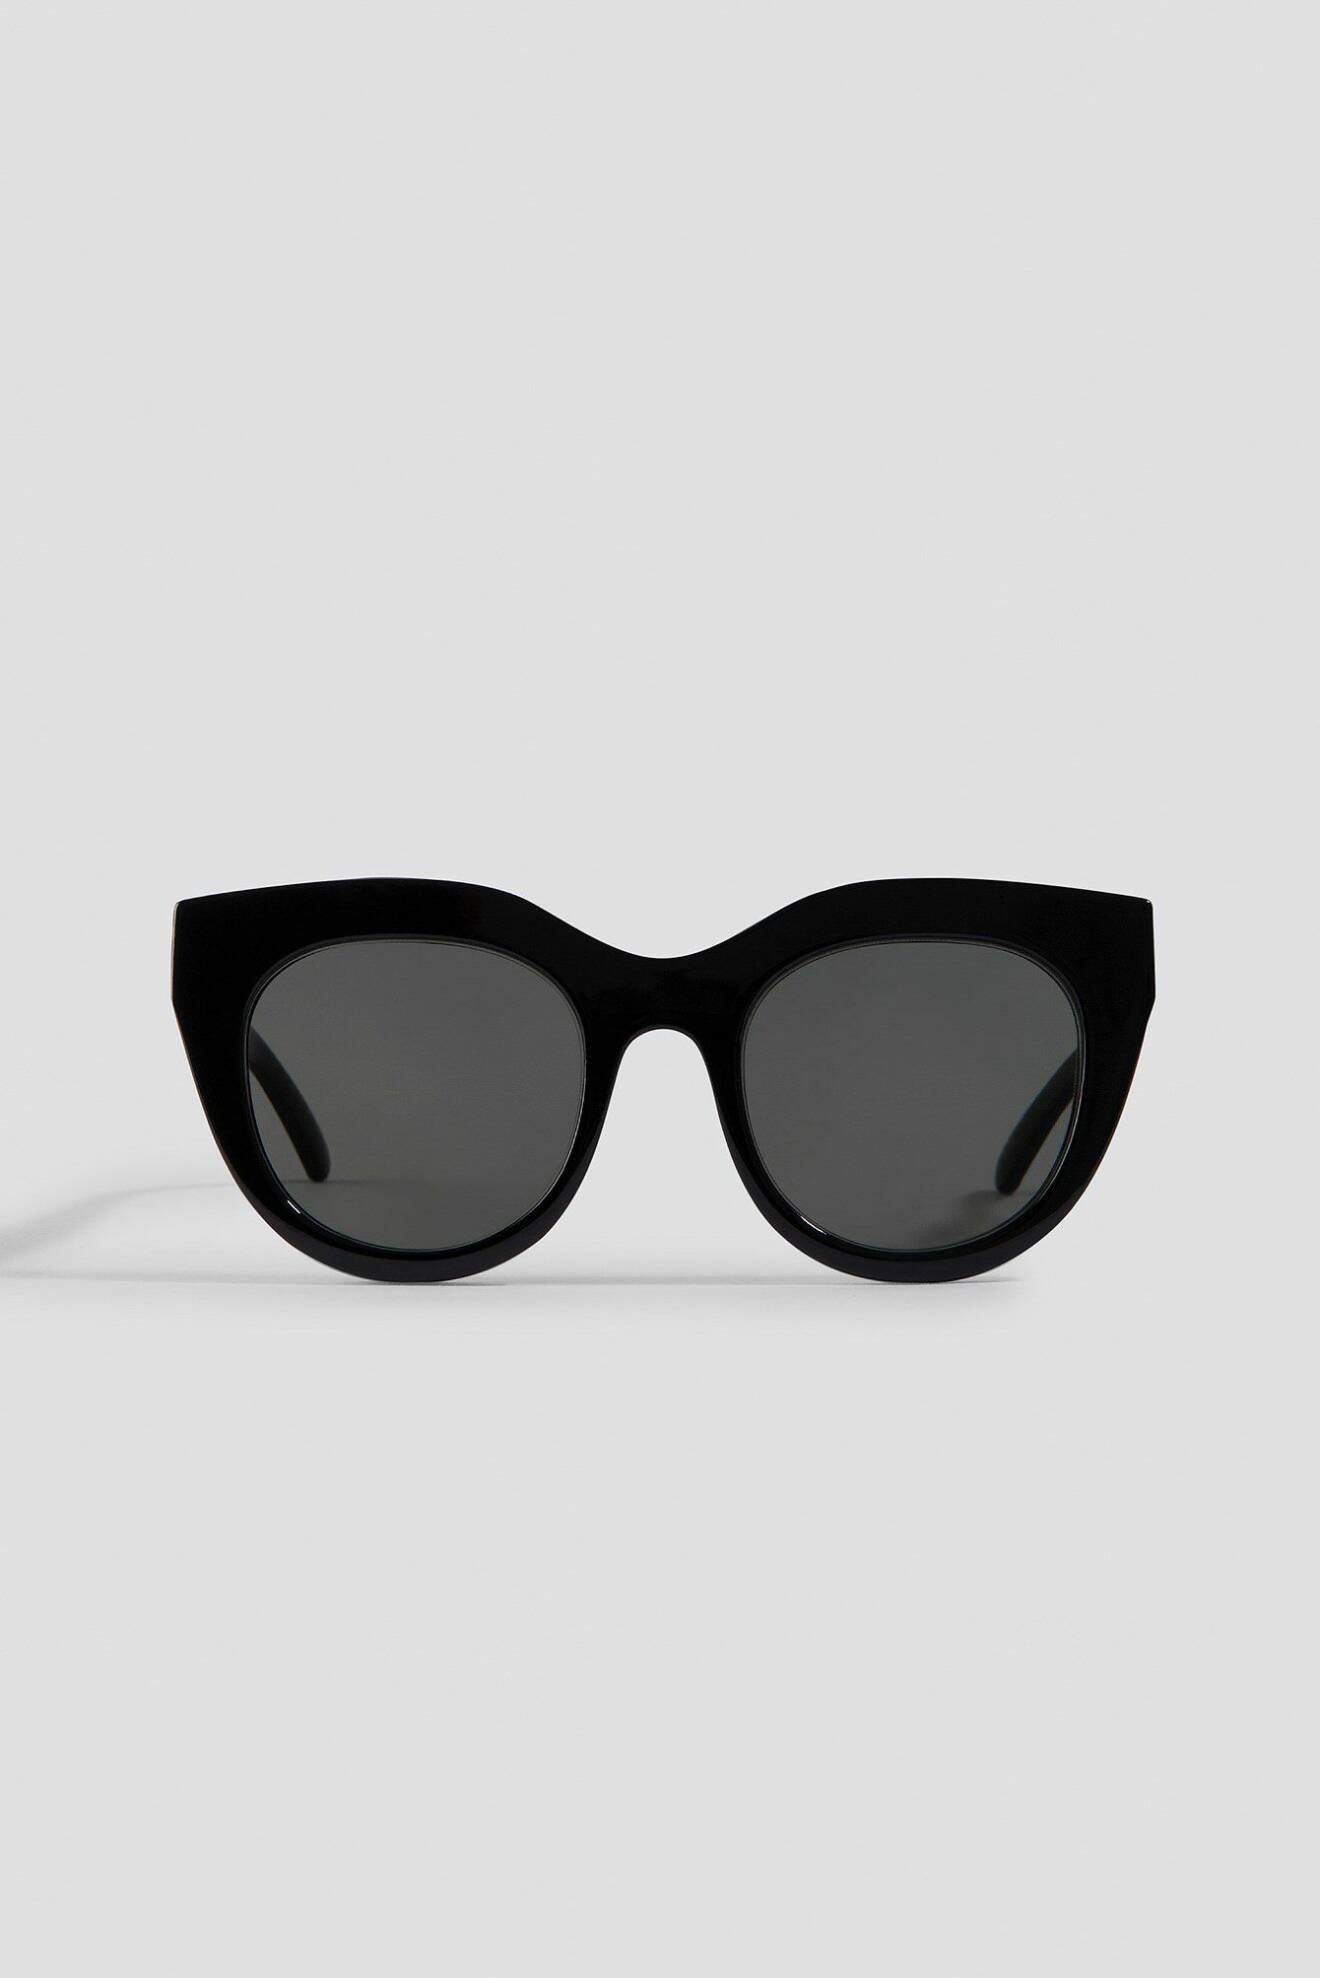 Solglasögon från Le Specs